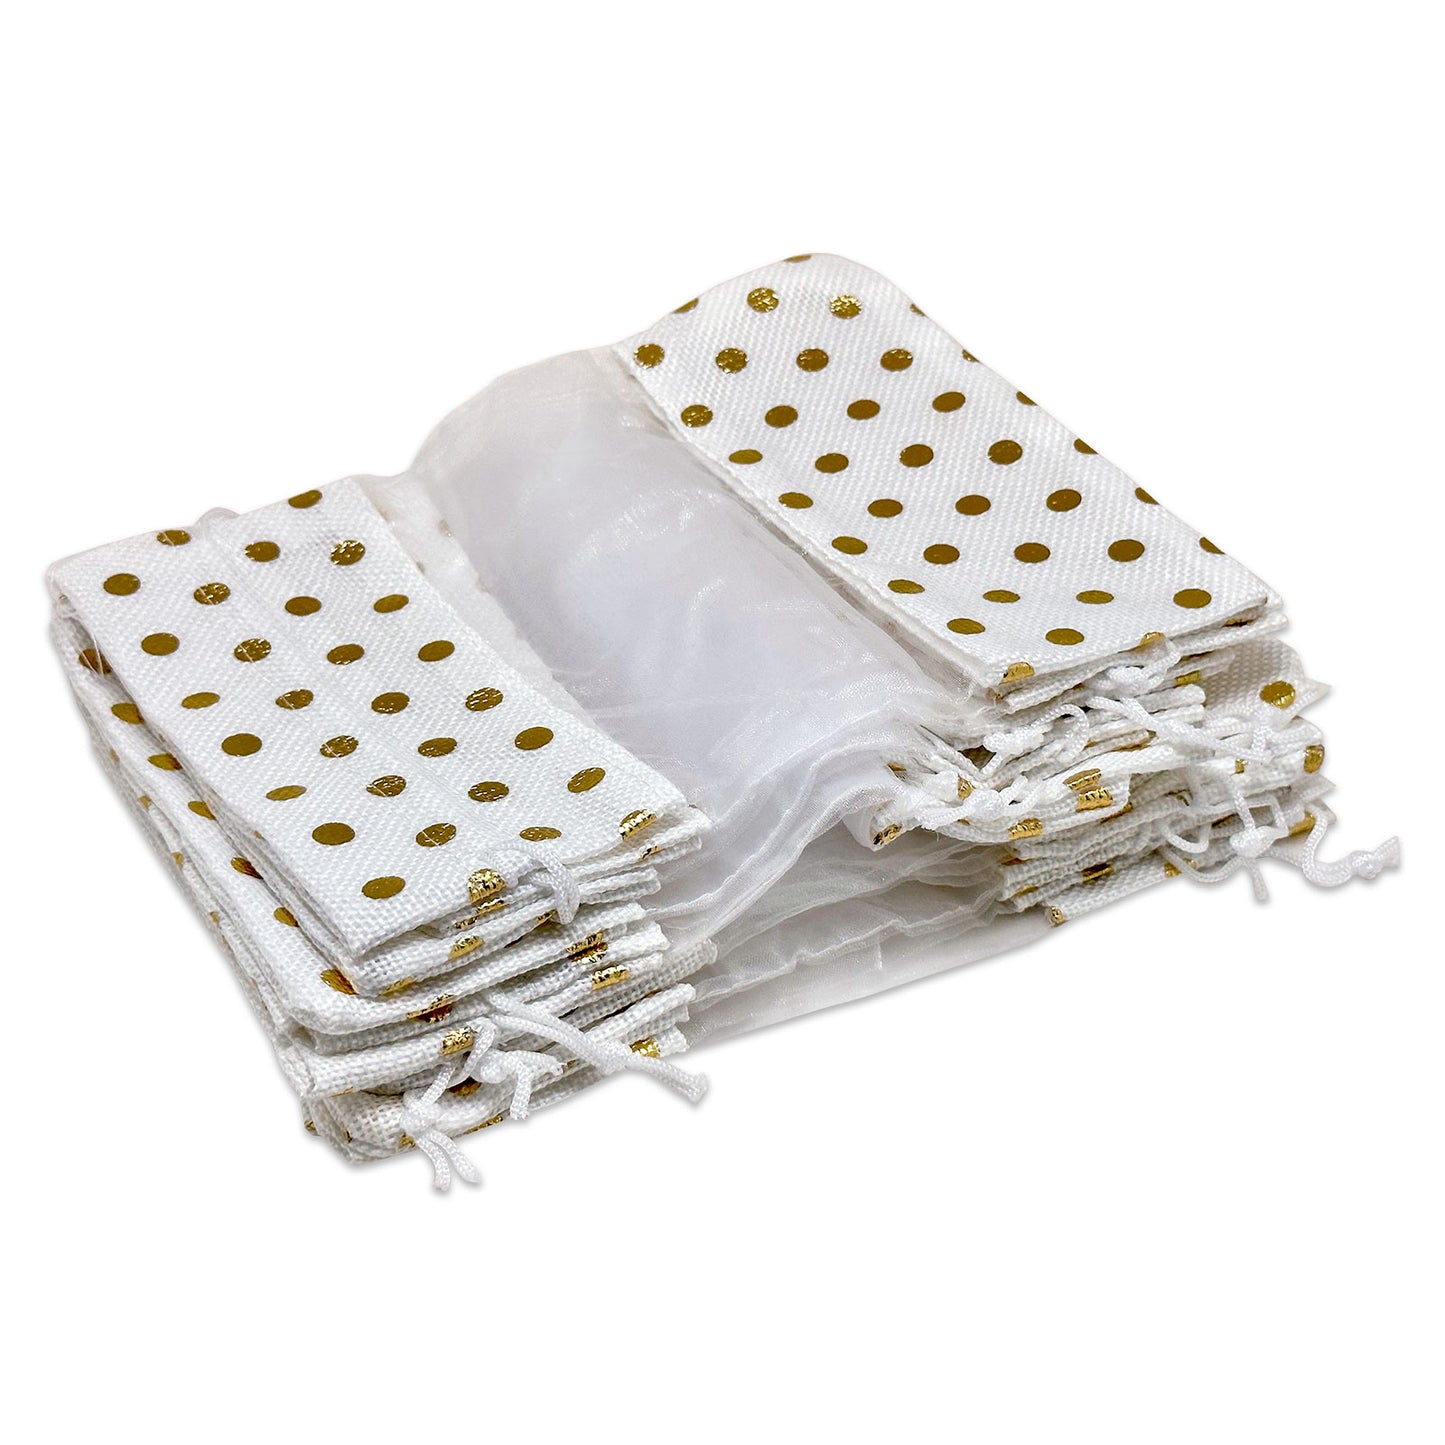 5" x 7" White with Gold Polka Dot Linen Burlap and Sheer Organza Gift Bag